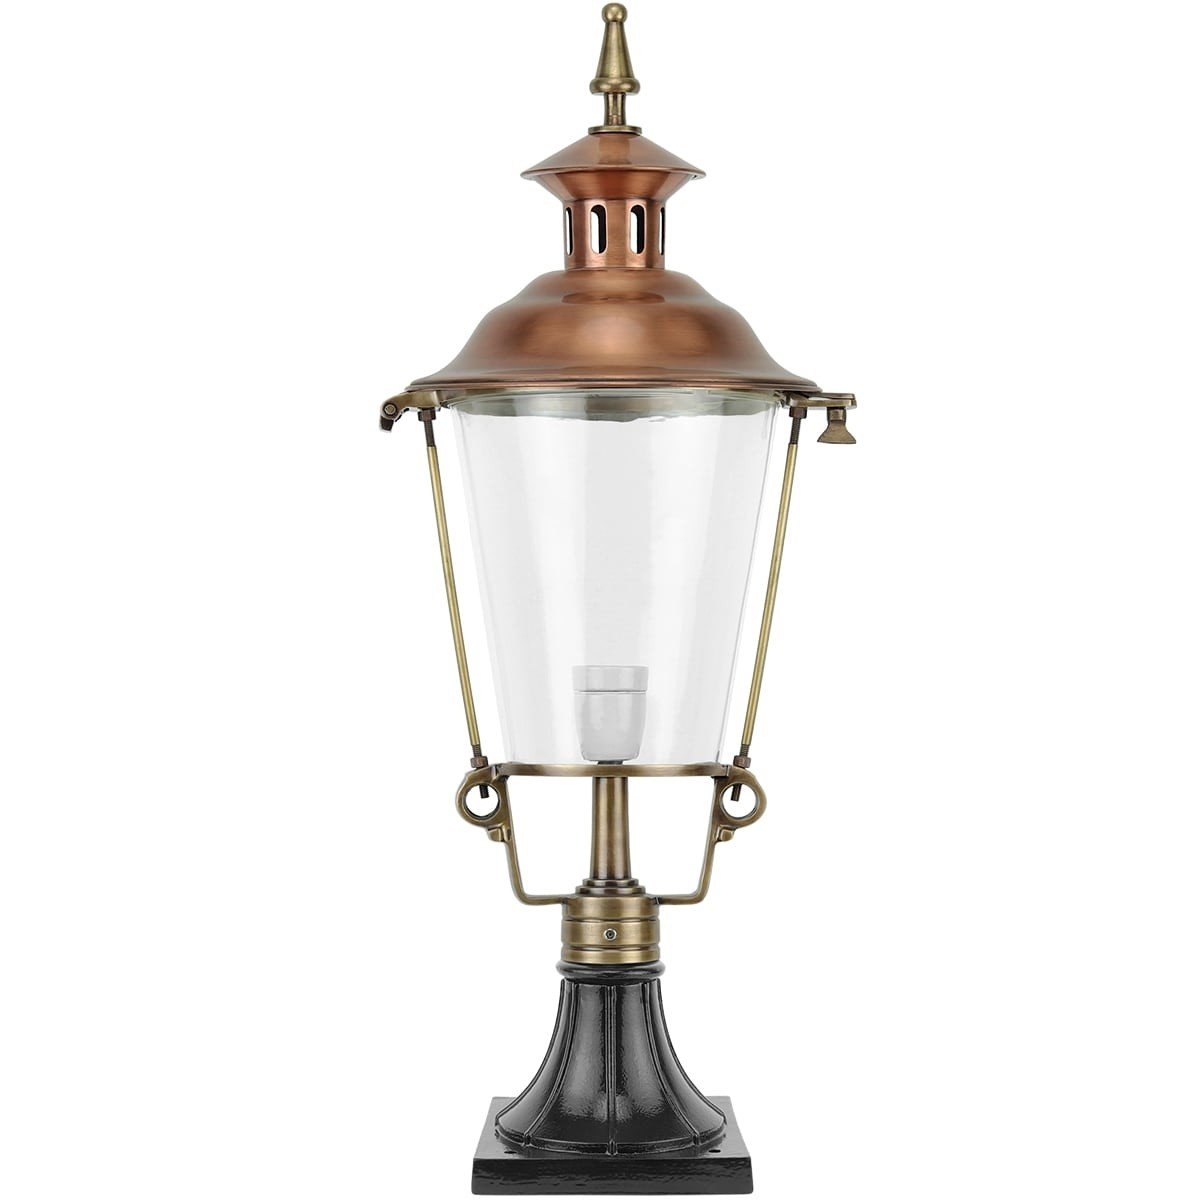 Lamp lantern Benschop copper - 76 cm